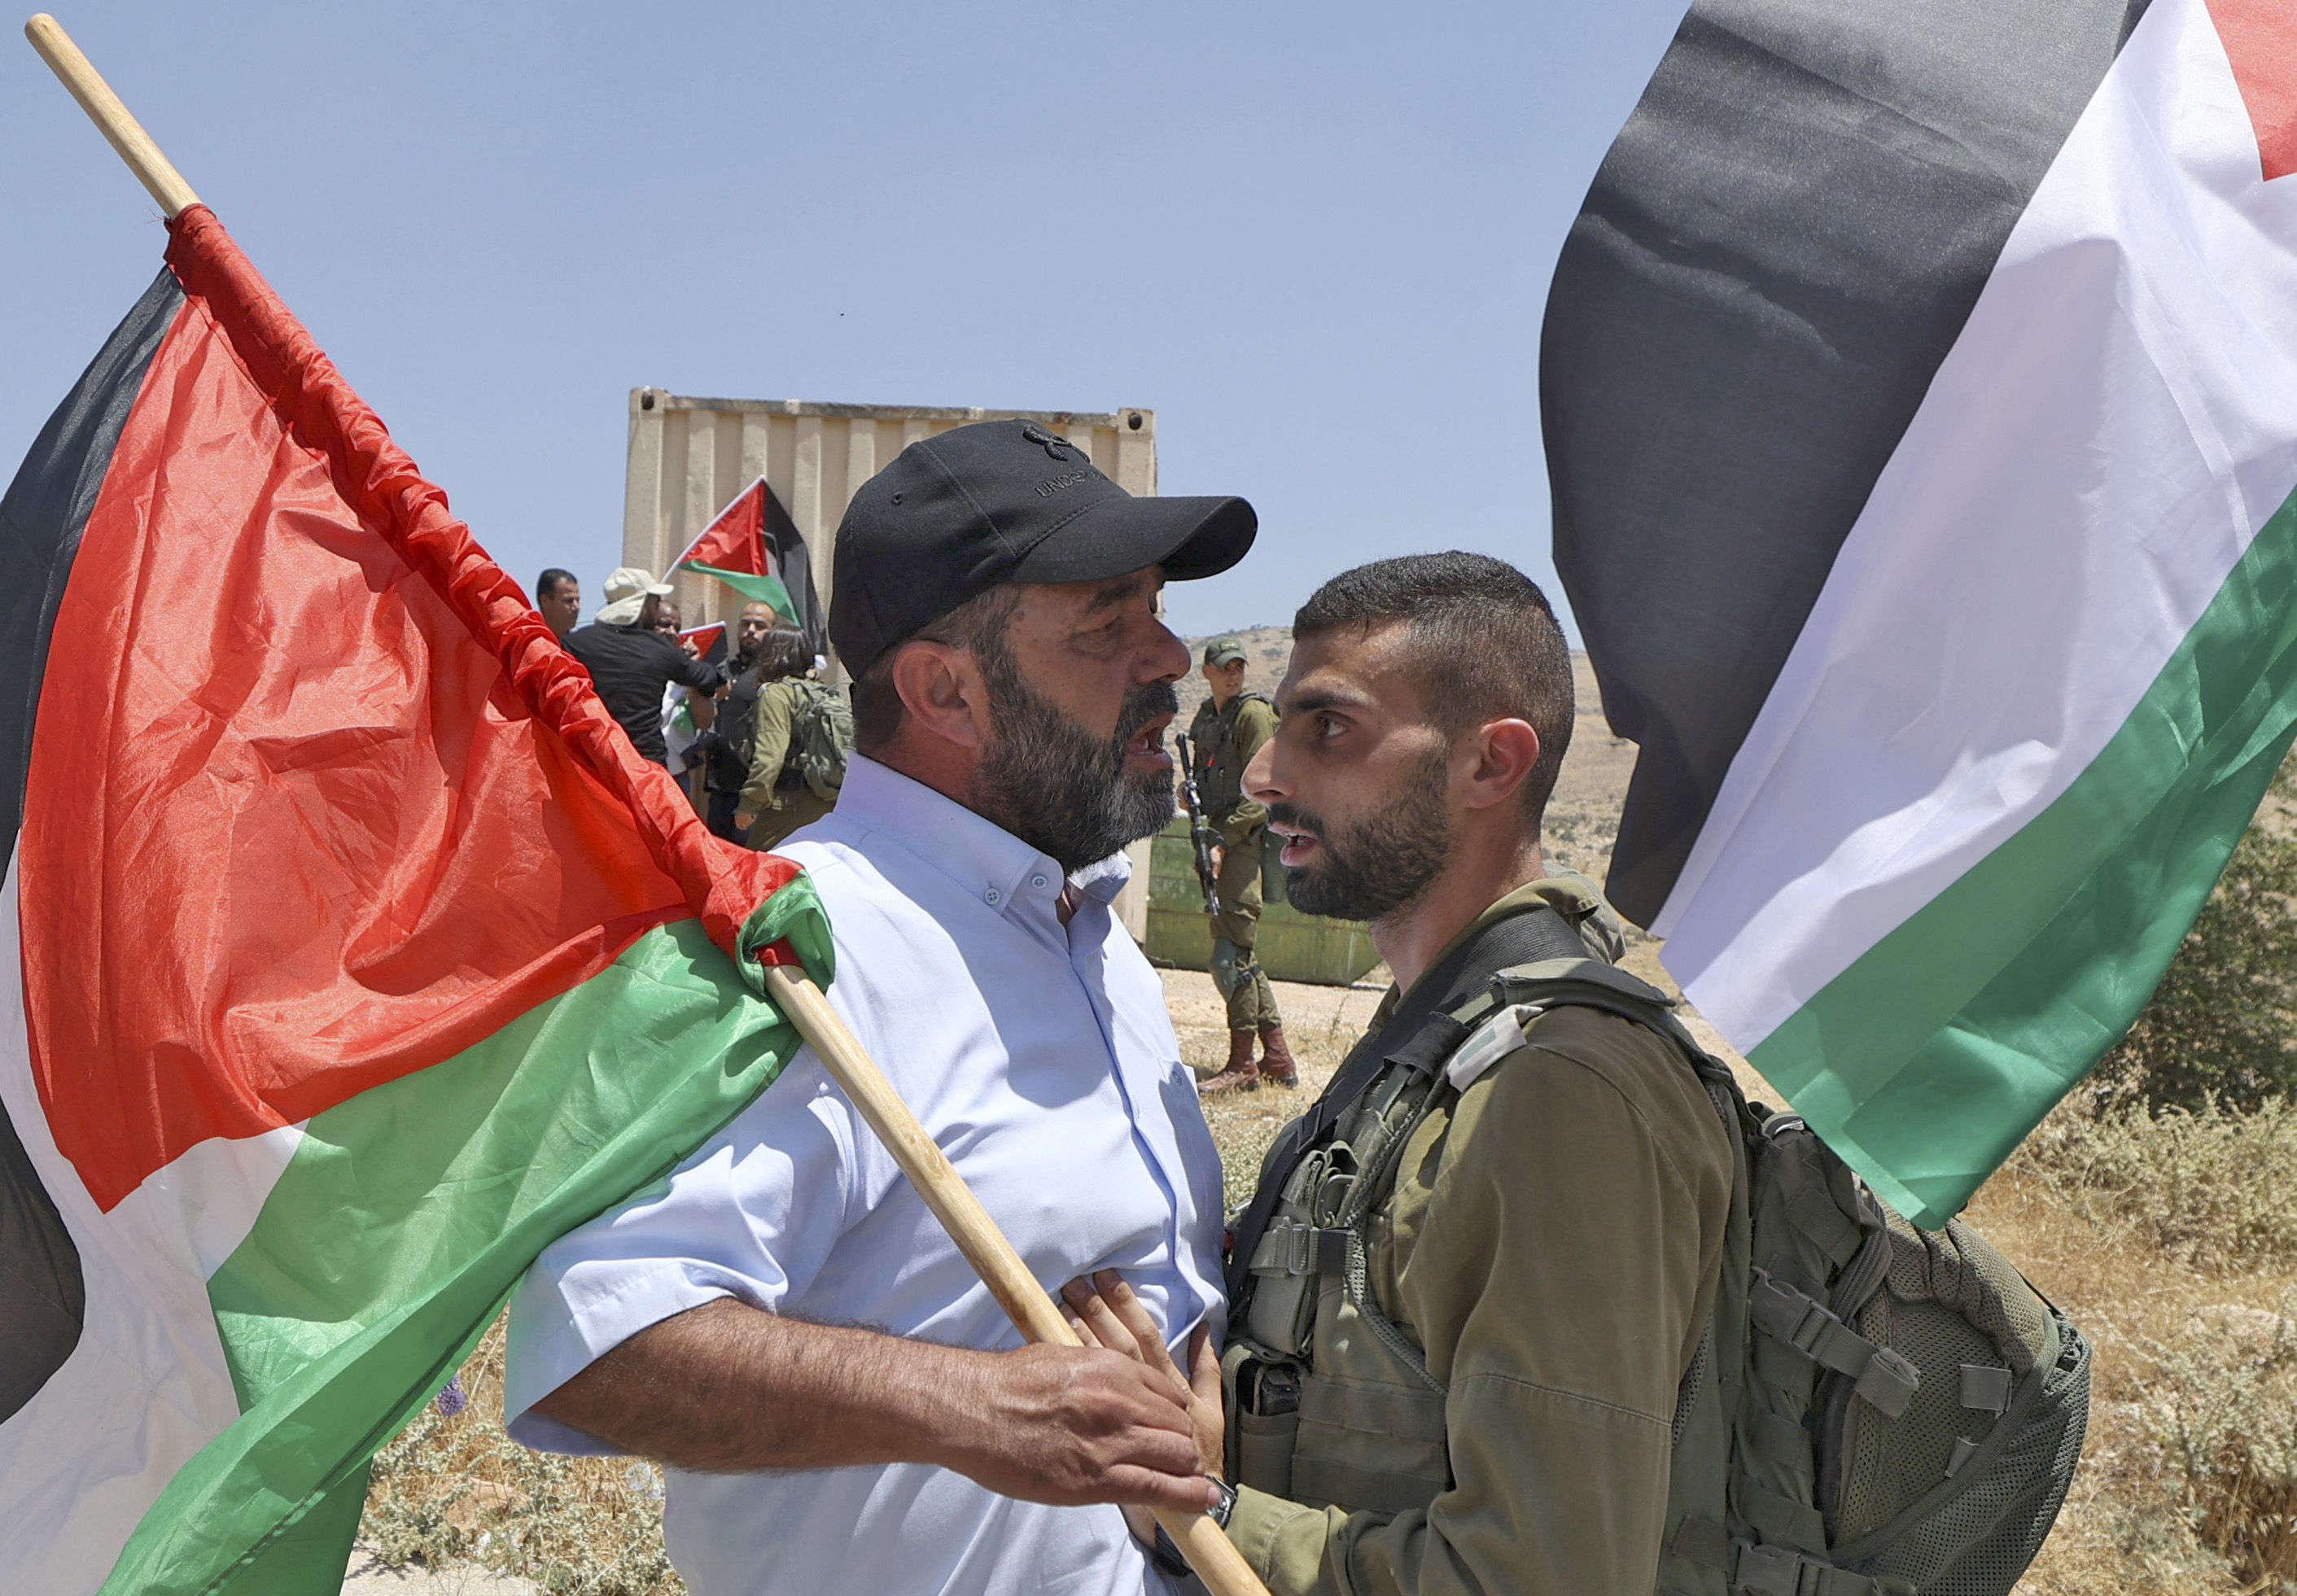 Israeli nationalists wage battle against Palestinian flag - The Boston Globe